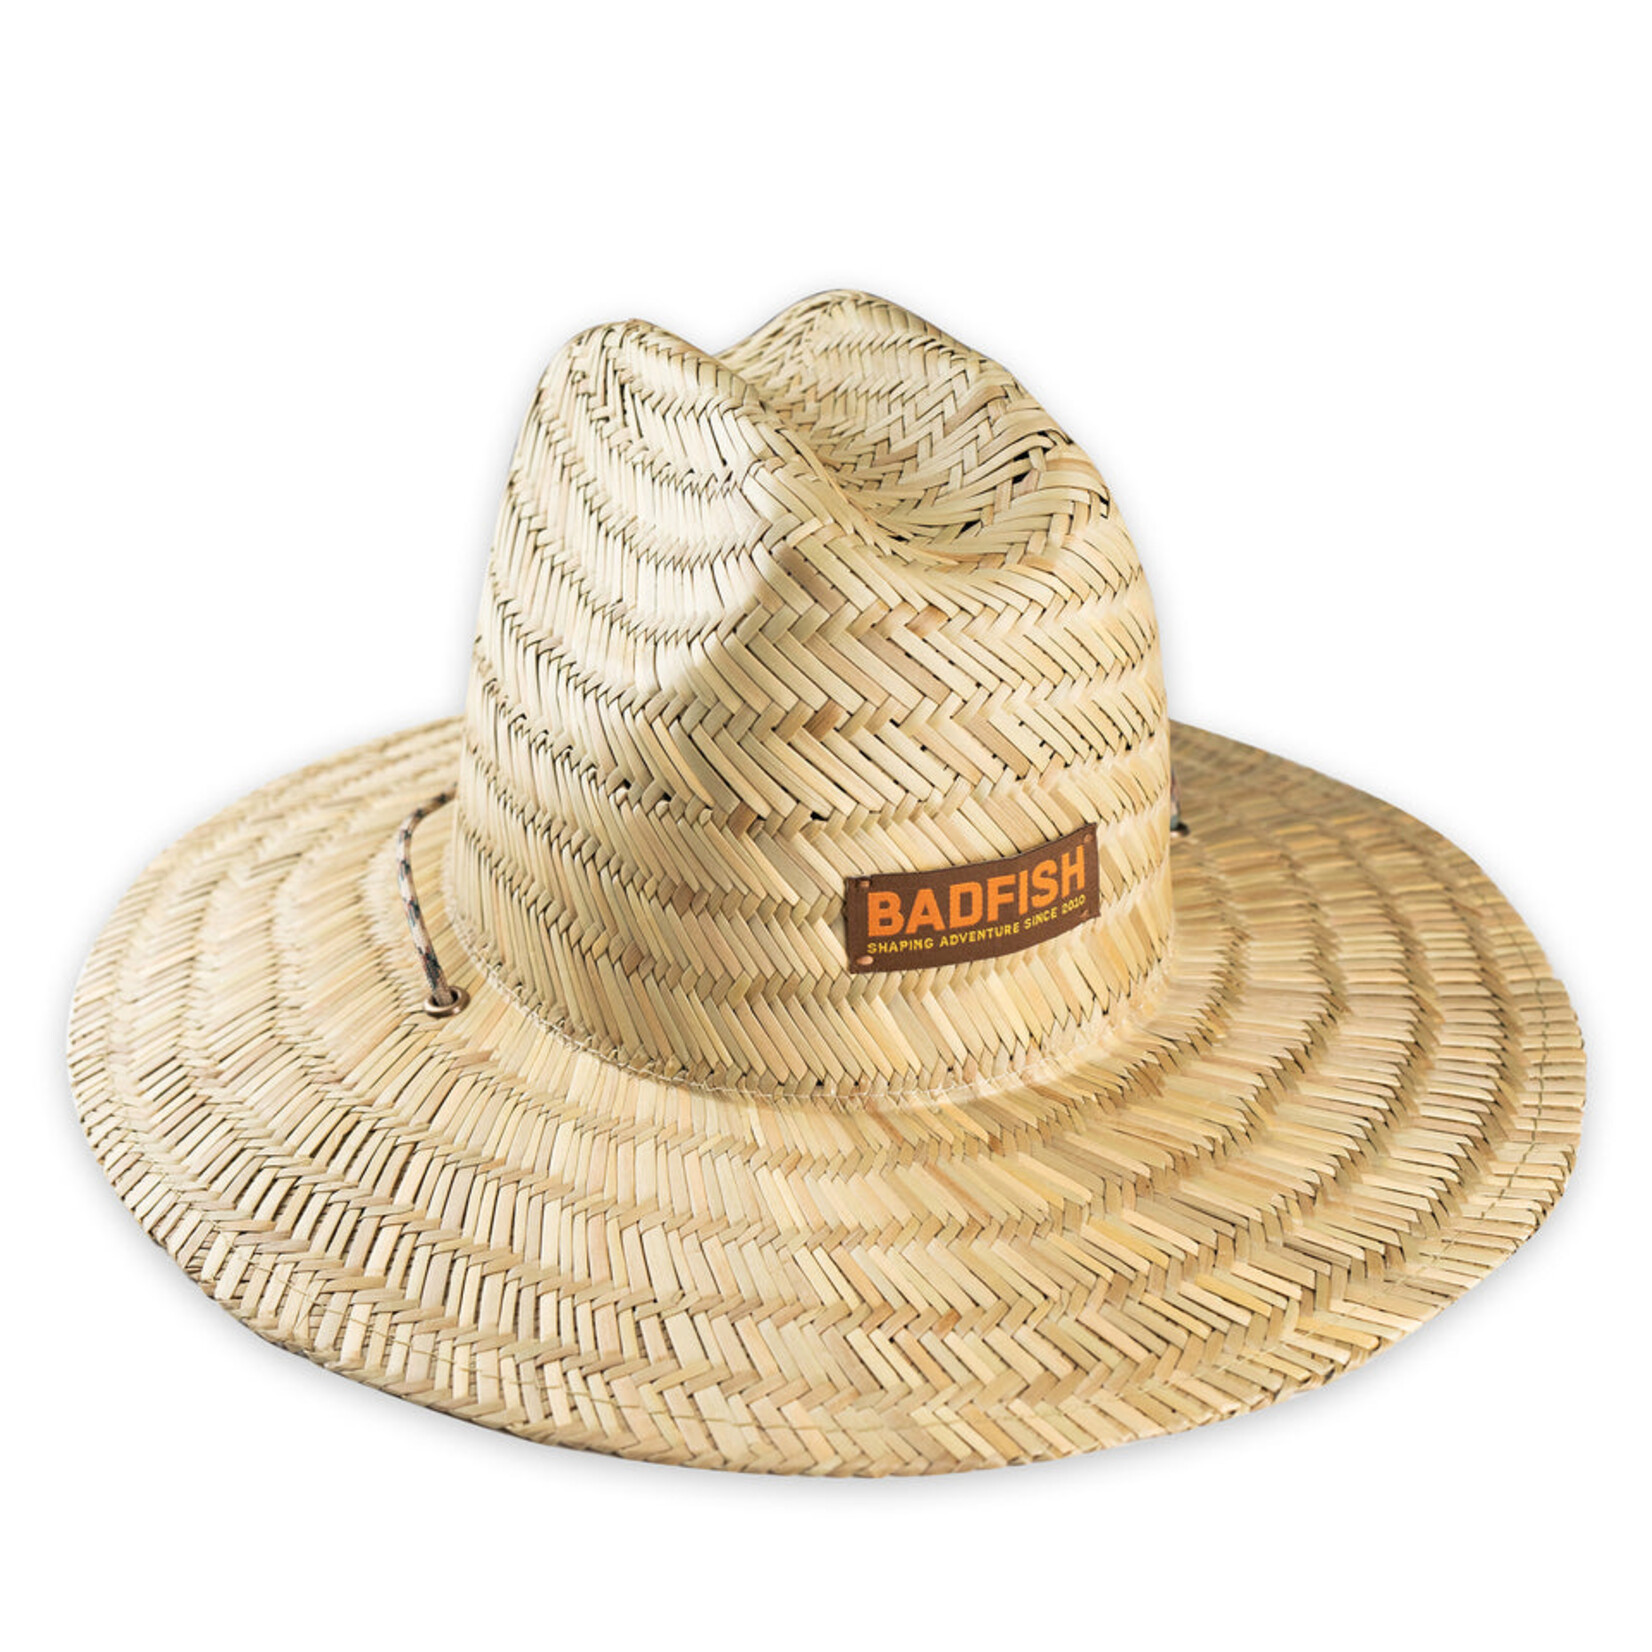 Badfish Badfish Straw Lifeguard Hat